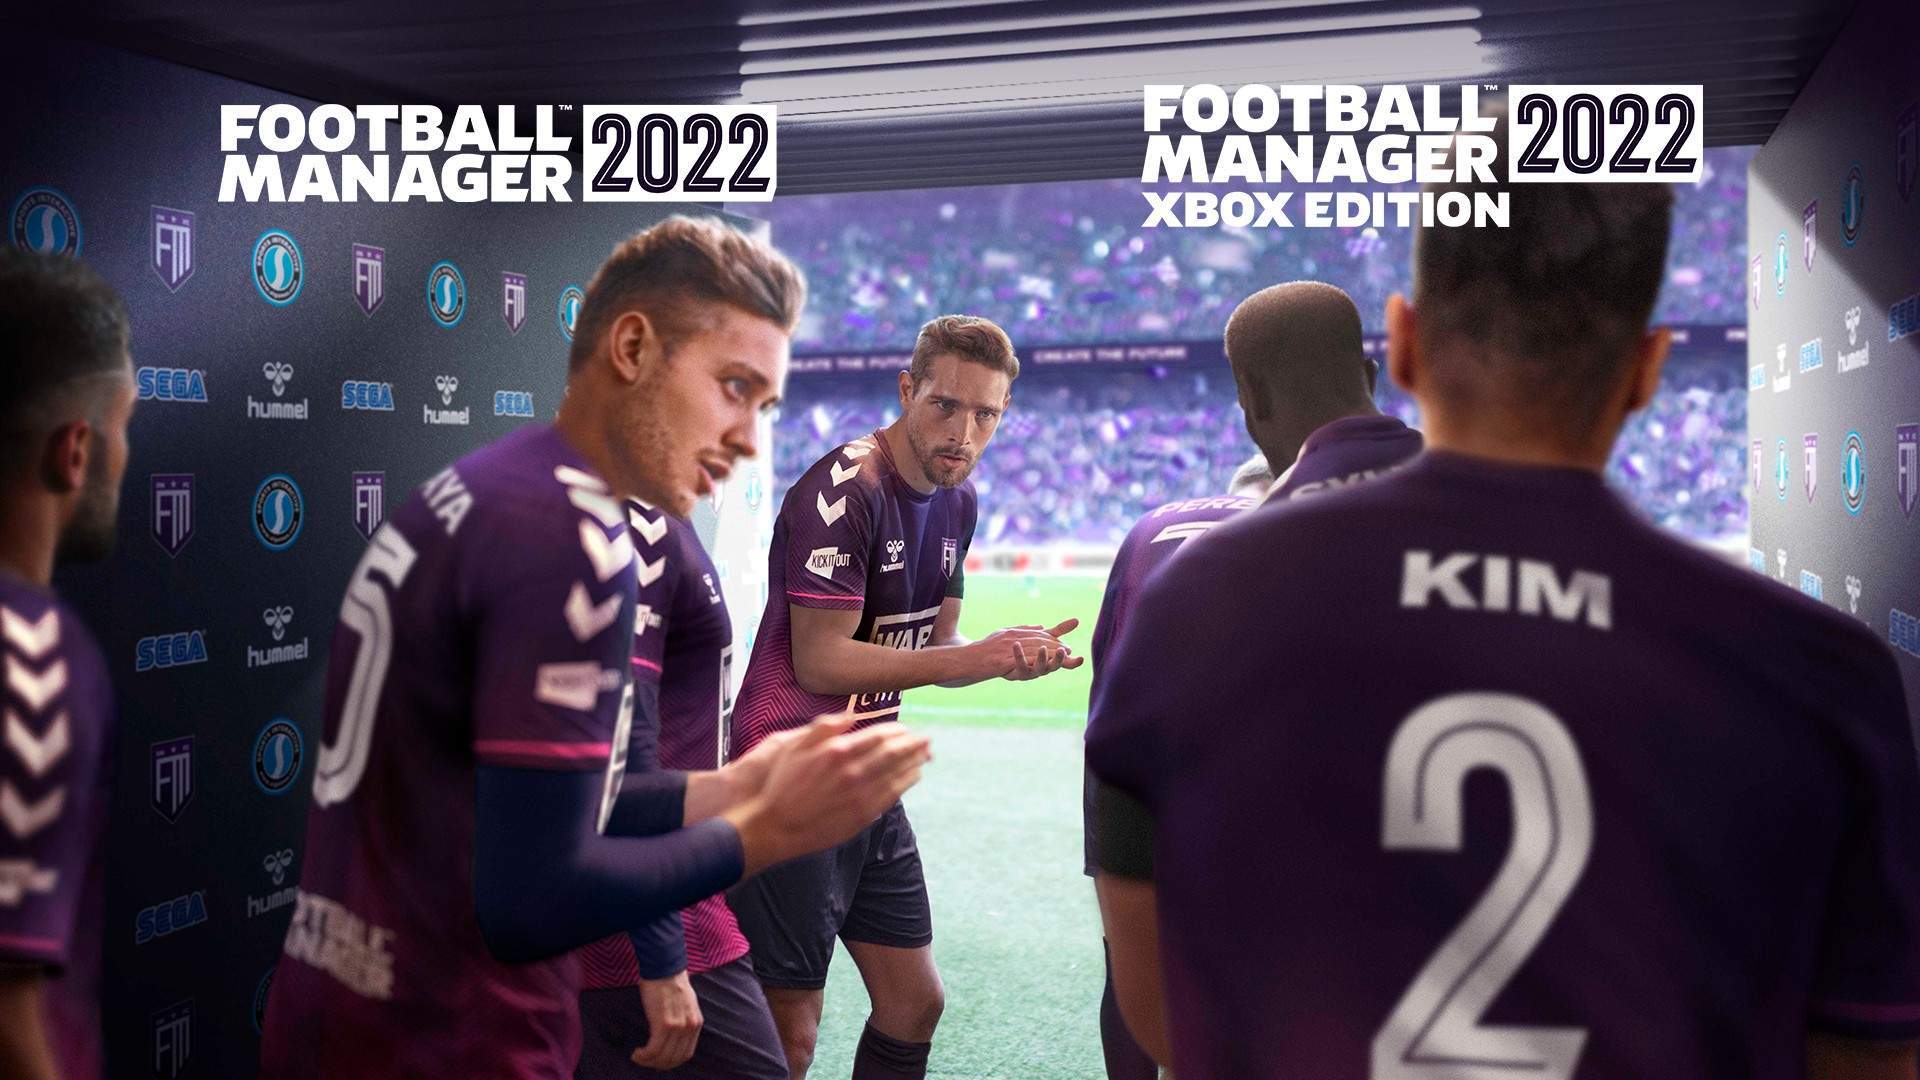 Football Manager 2022 e Football Manager 2022 Xbox Edition debuttano il 9 novembre con Xbox Game Pass